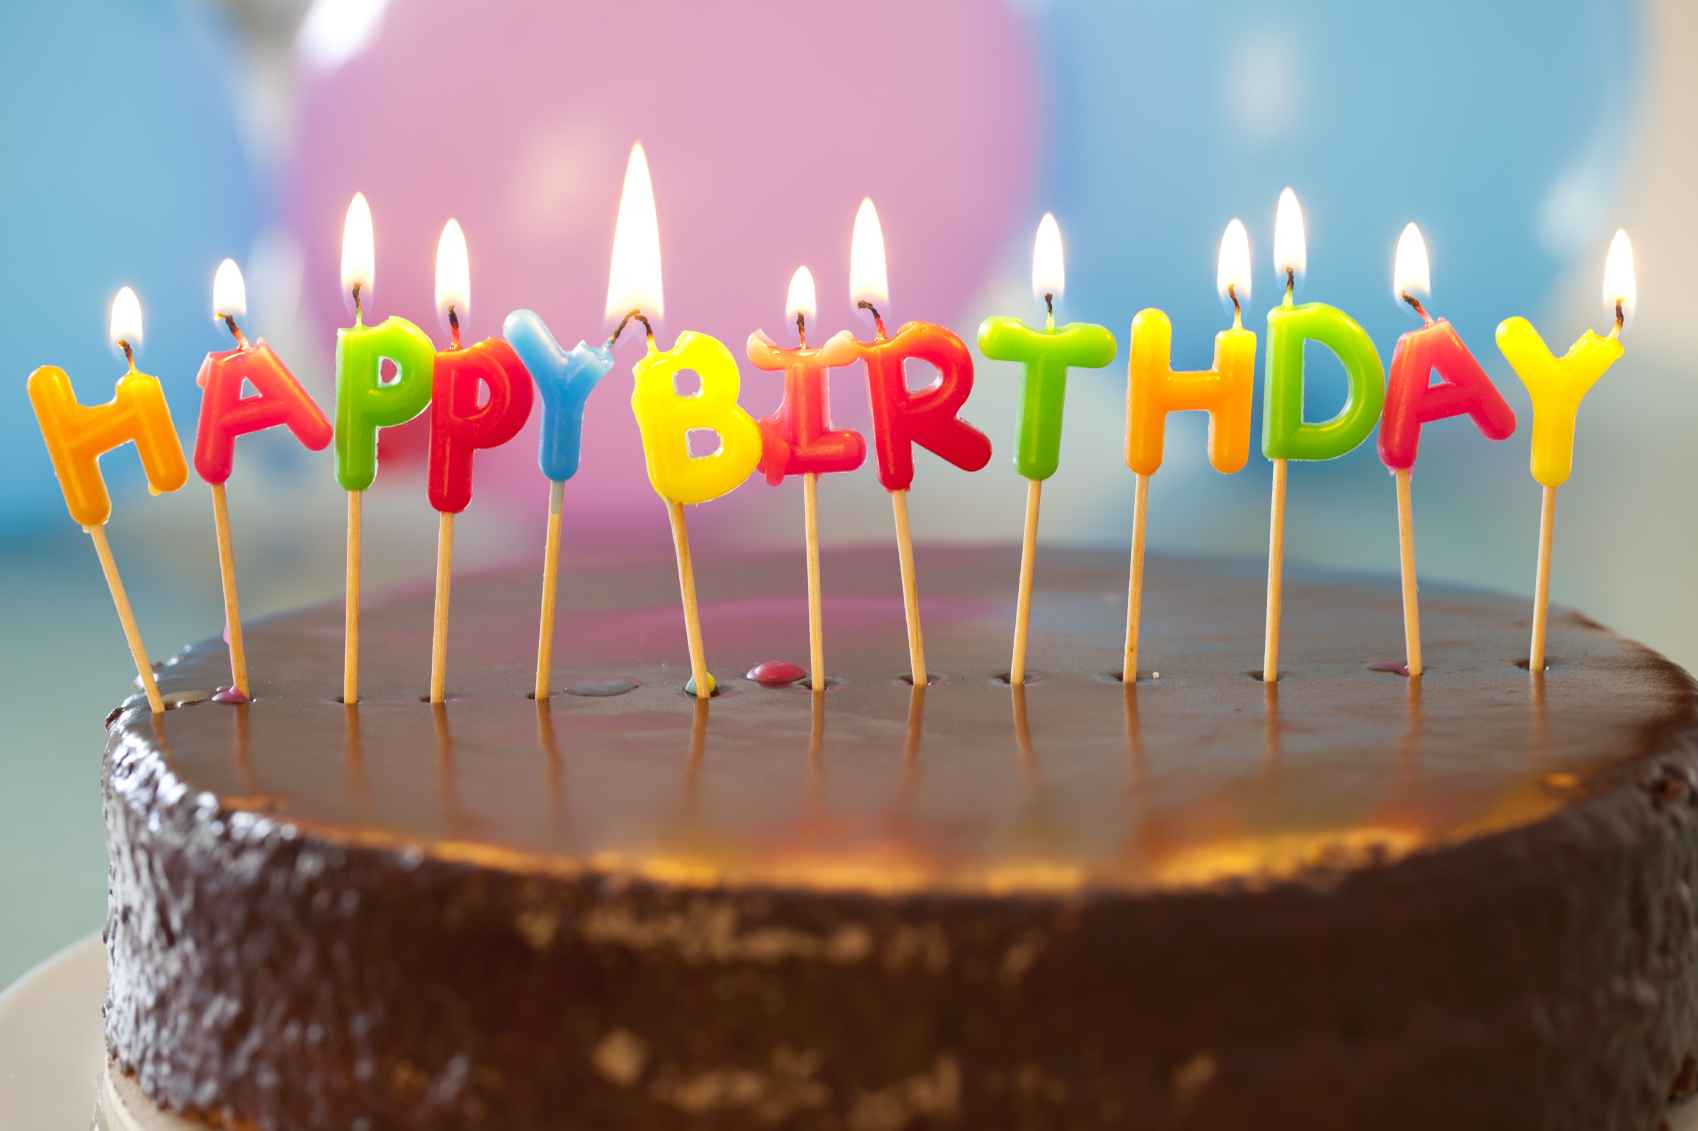 Buy Happy Birthday Cake Online | The Cakery Shop | Best Deals, Buy Now